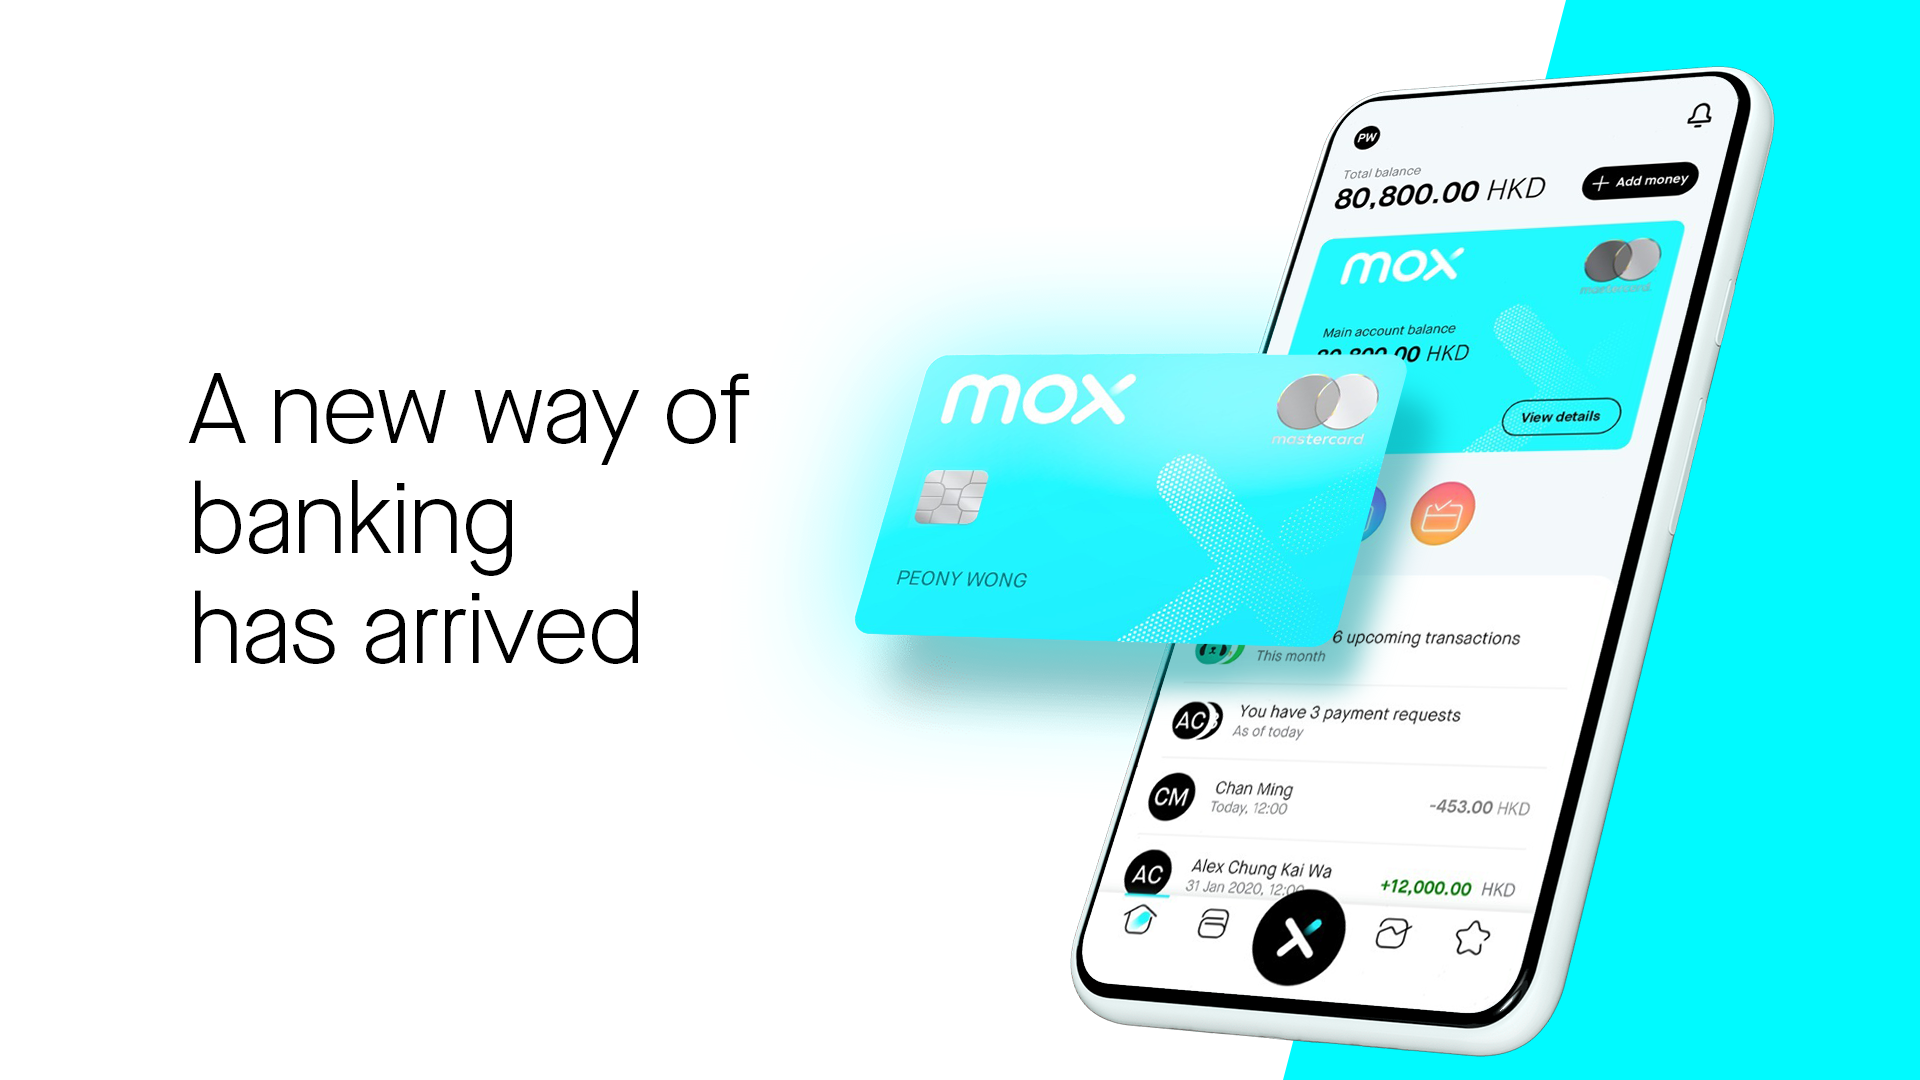 Introducing Mox